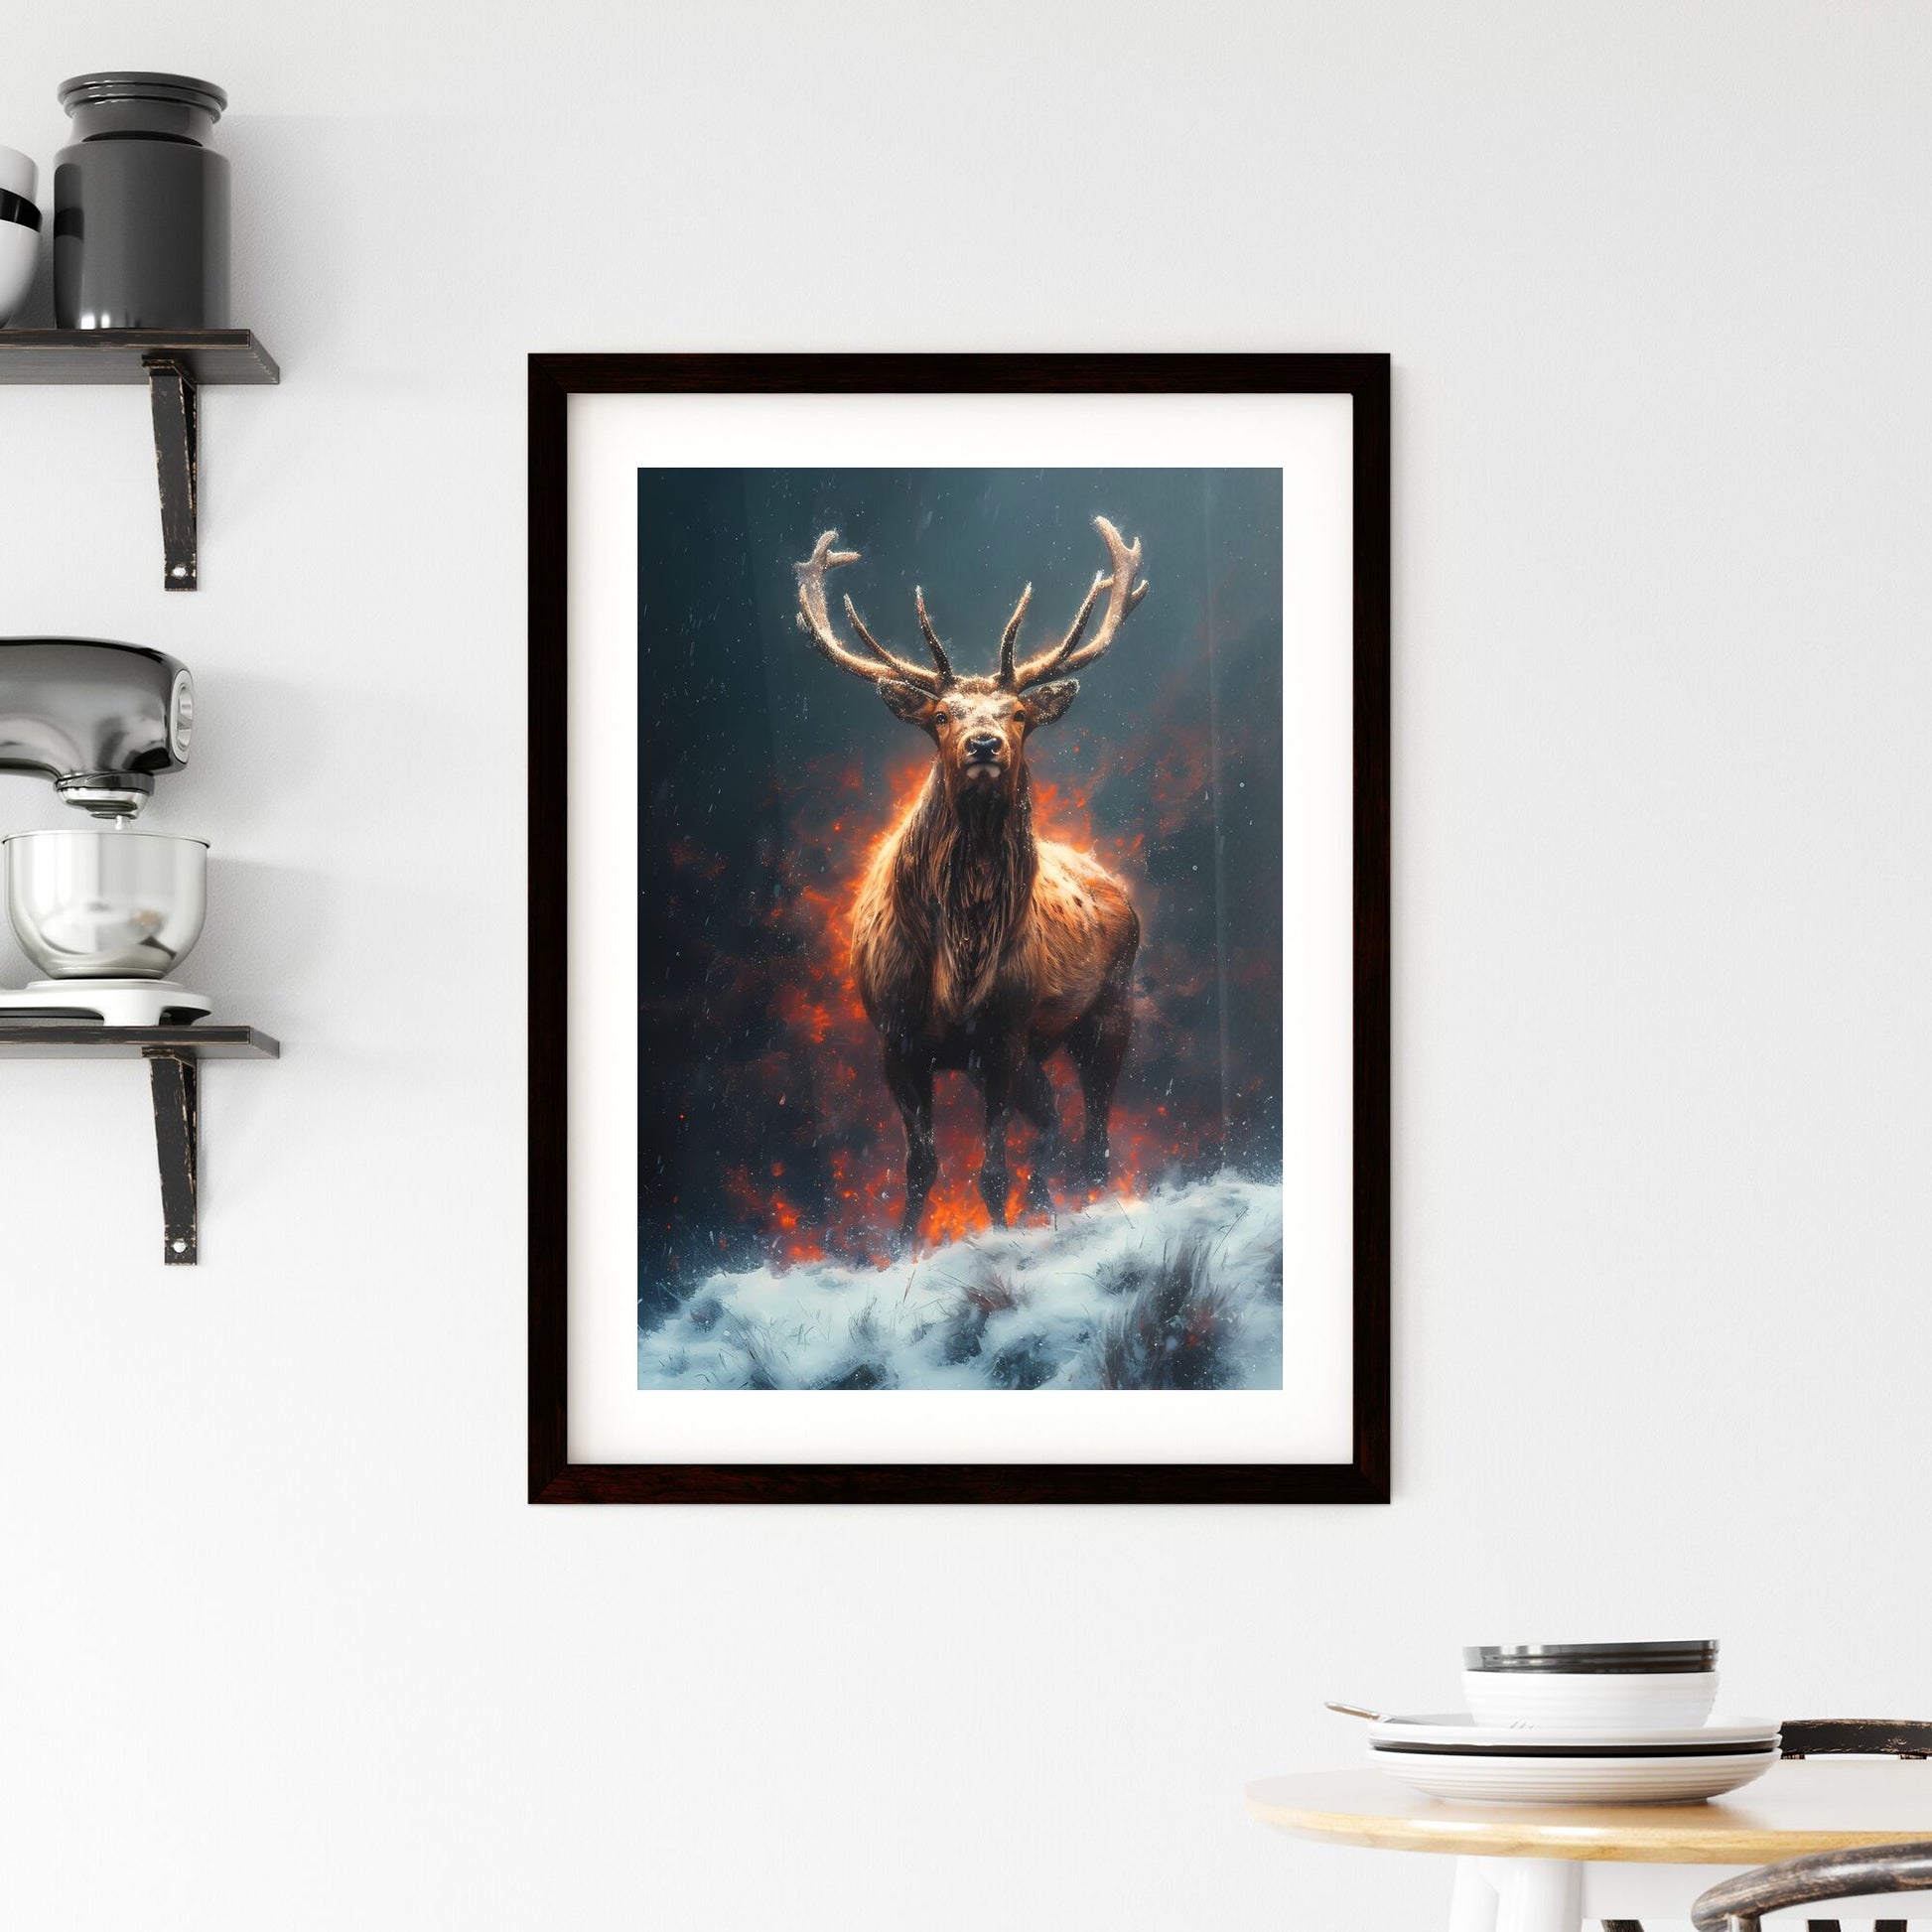 Winter wildlife wallpaper - Art print of a deer with antlers standing in the snow Default Title